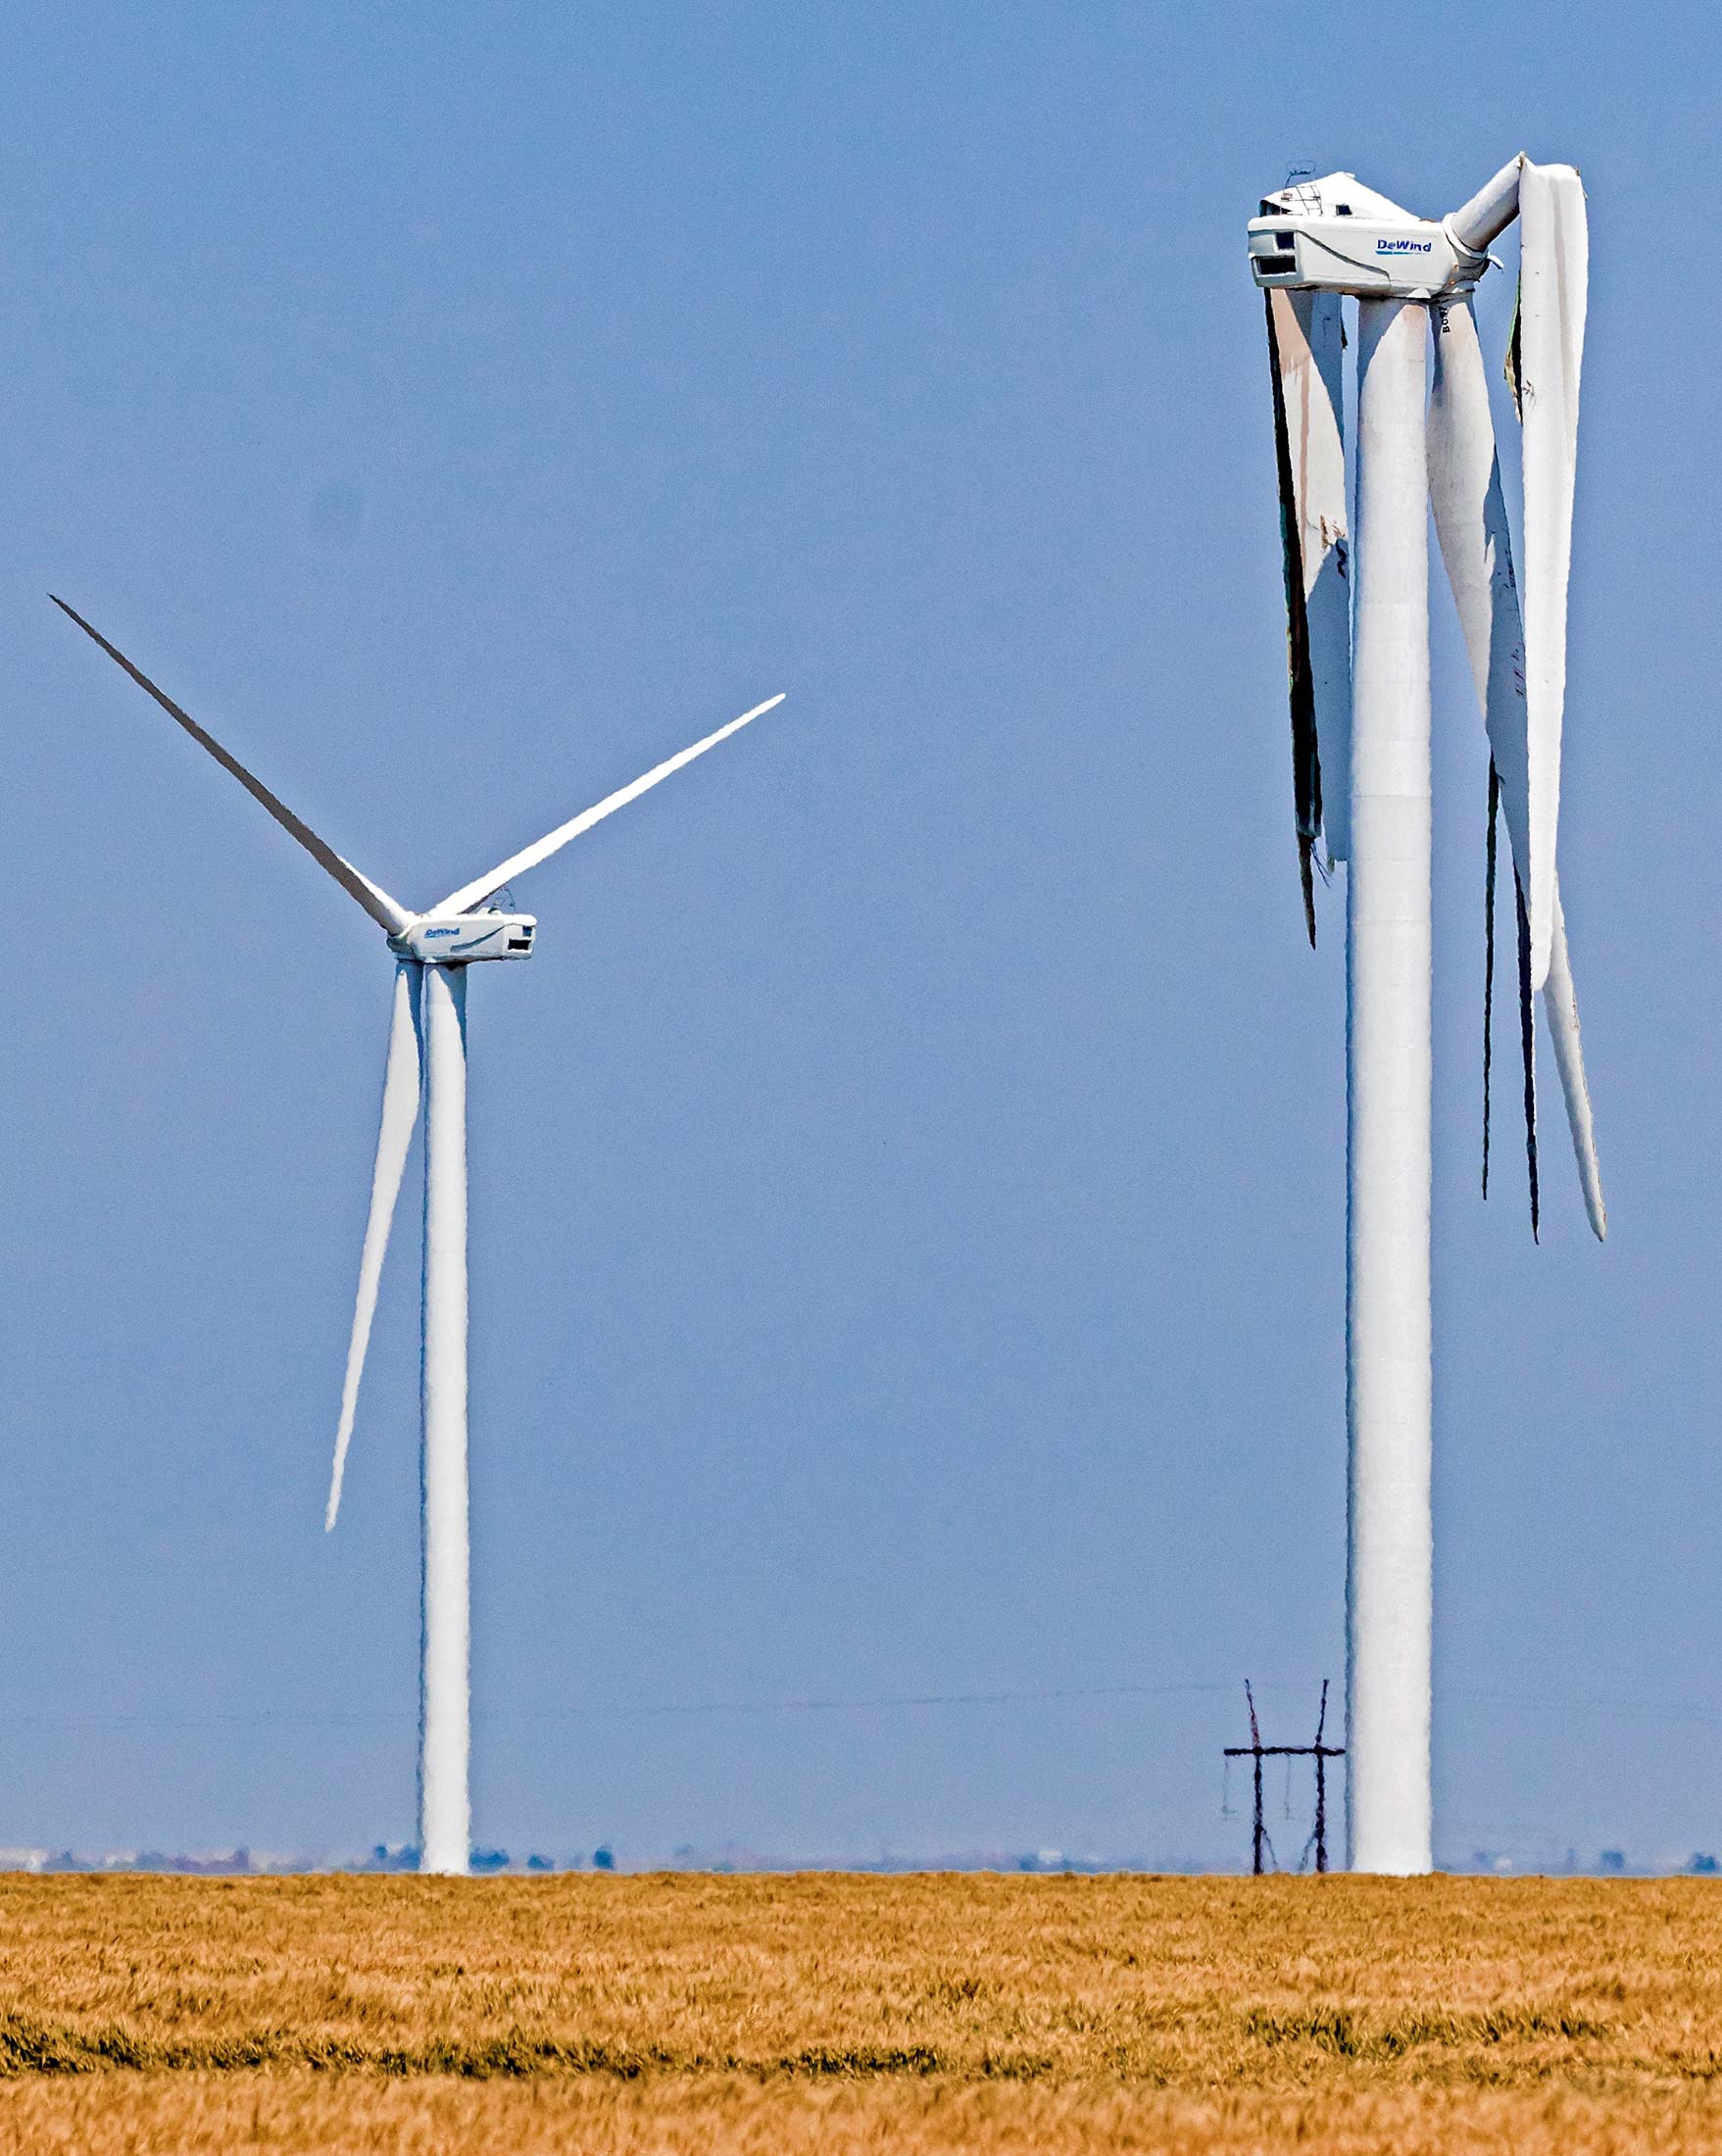 Regional MS calls for investigation over Gilfach Goch wind turbine collapse